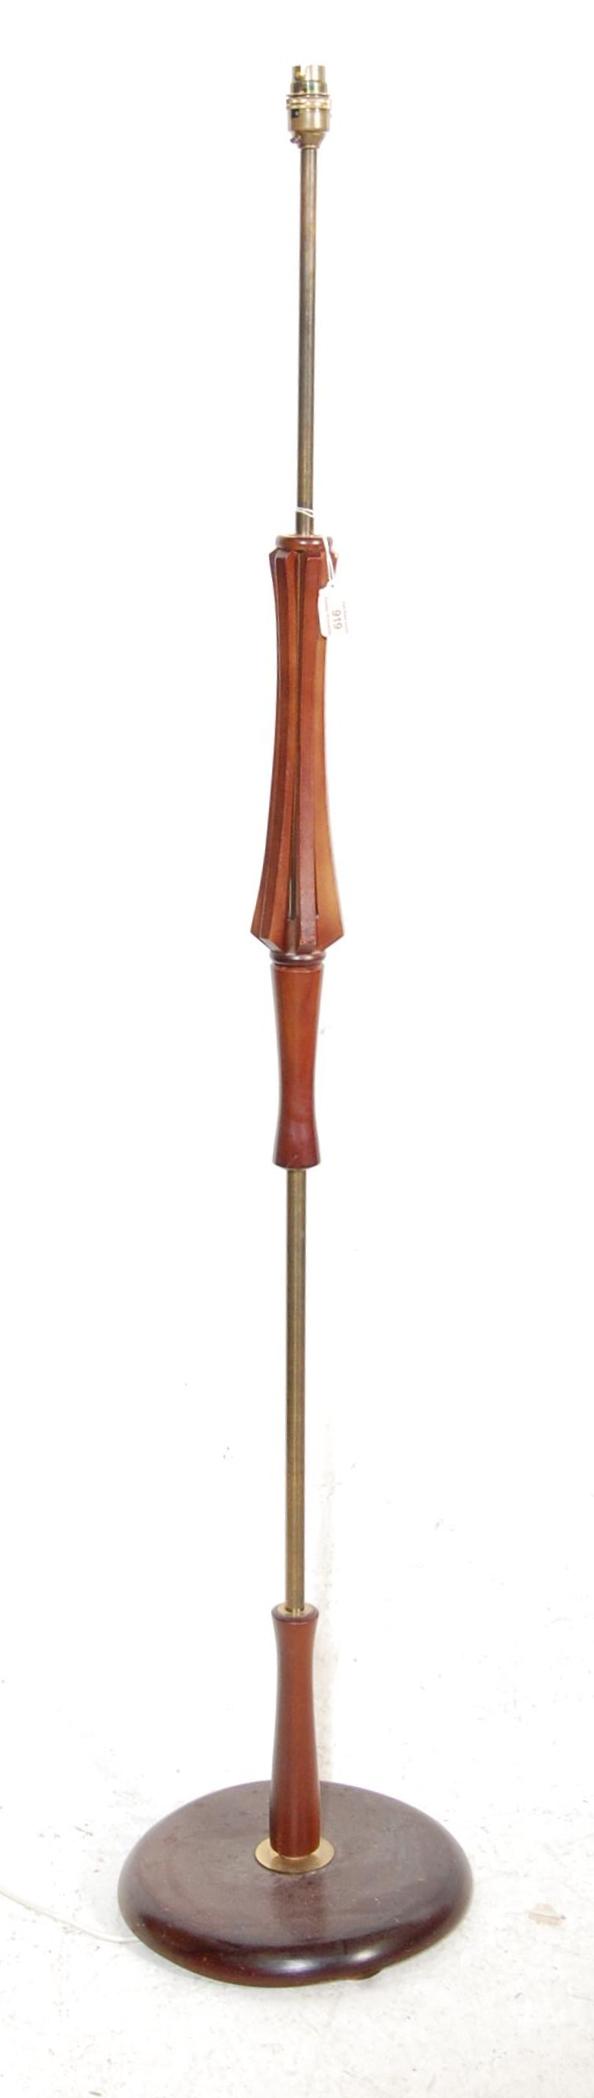 RETRO VINTAGE TEAK WOOD 1970' FLOOR STANDARD LAMP